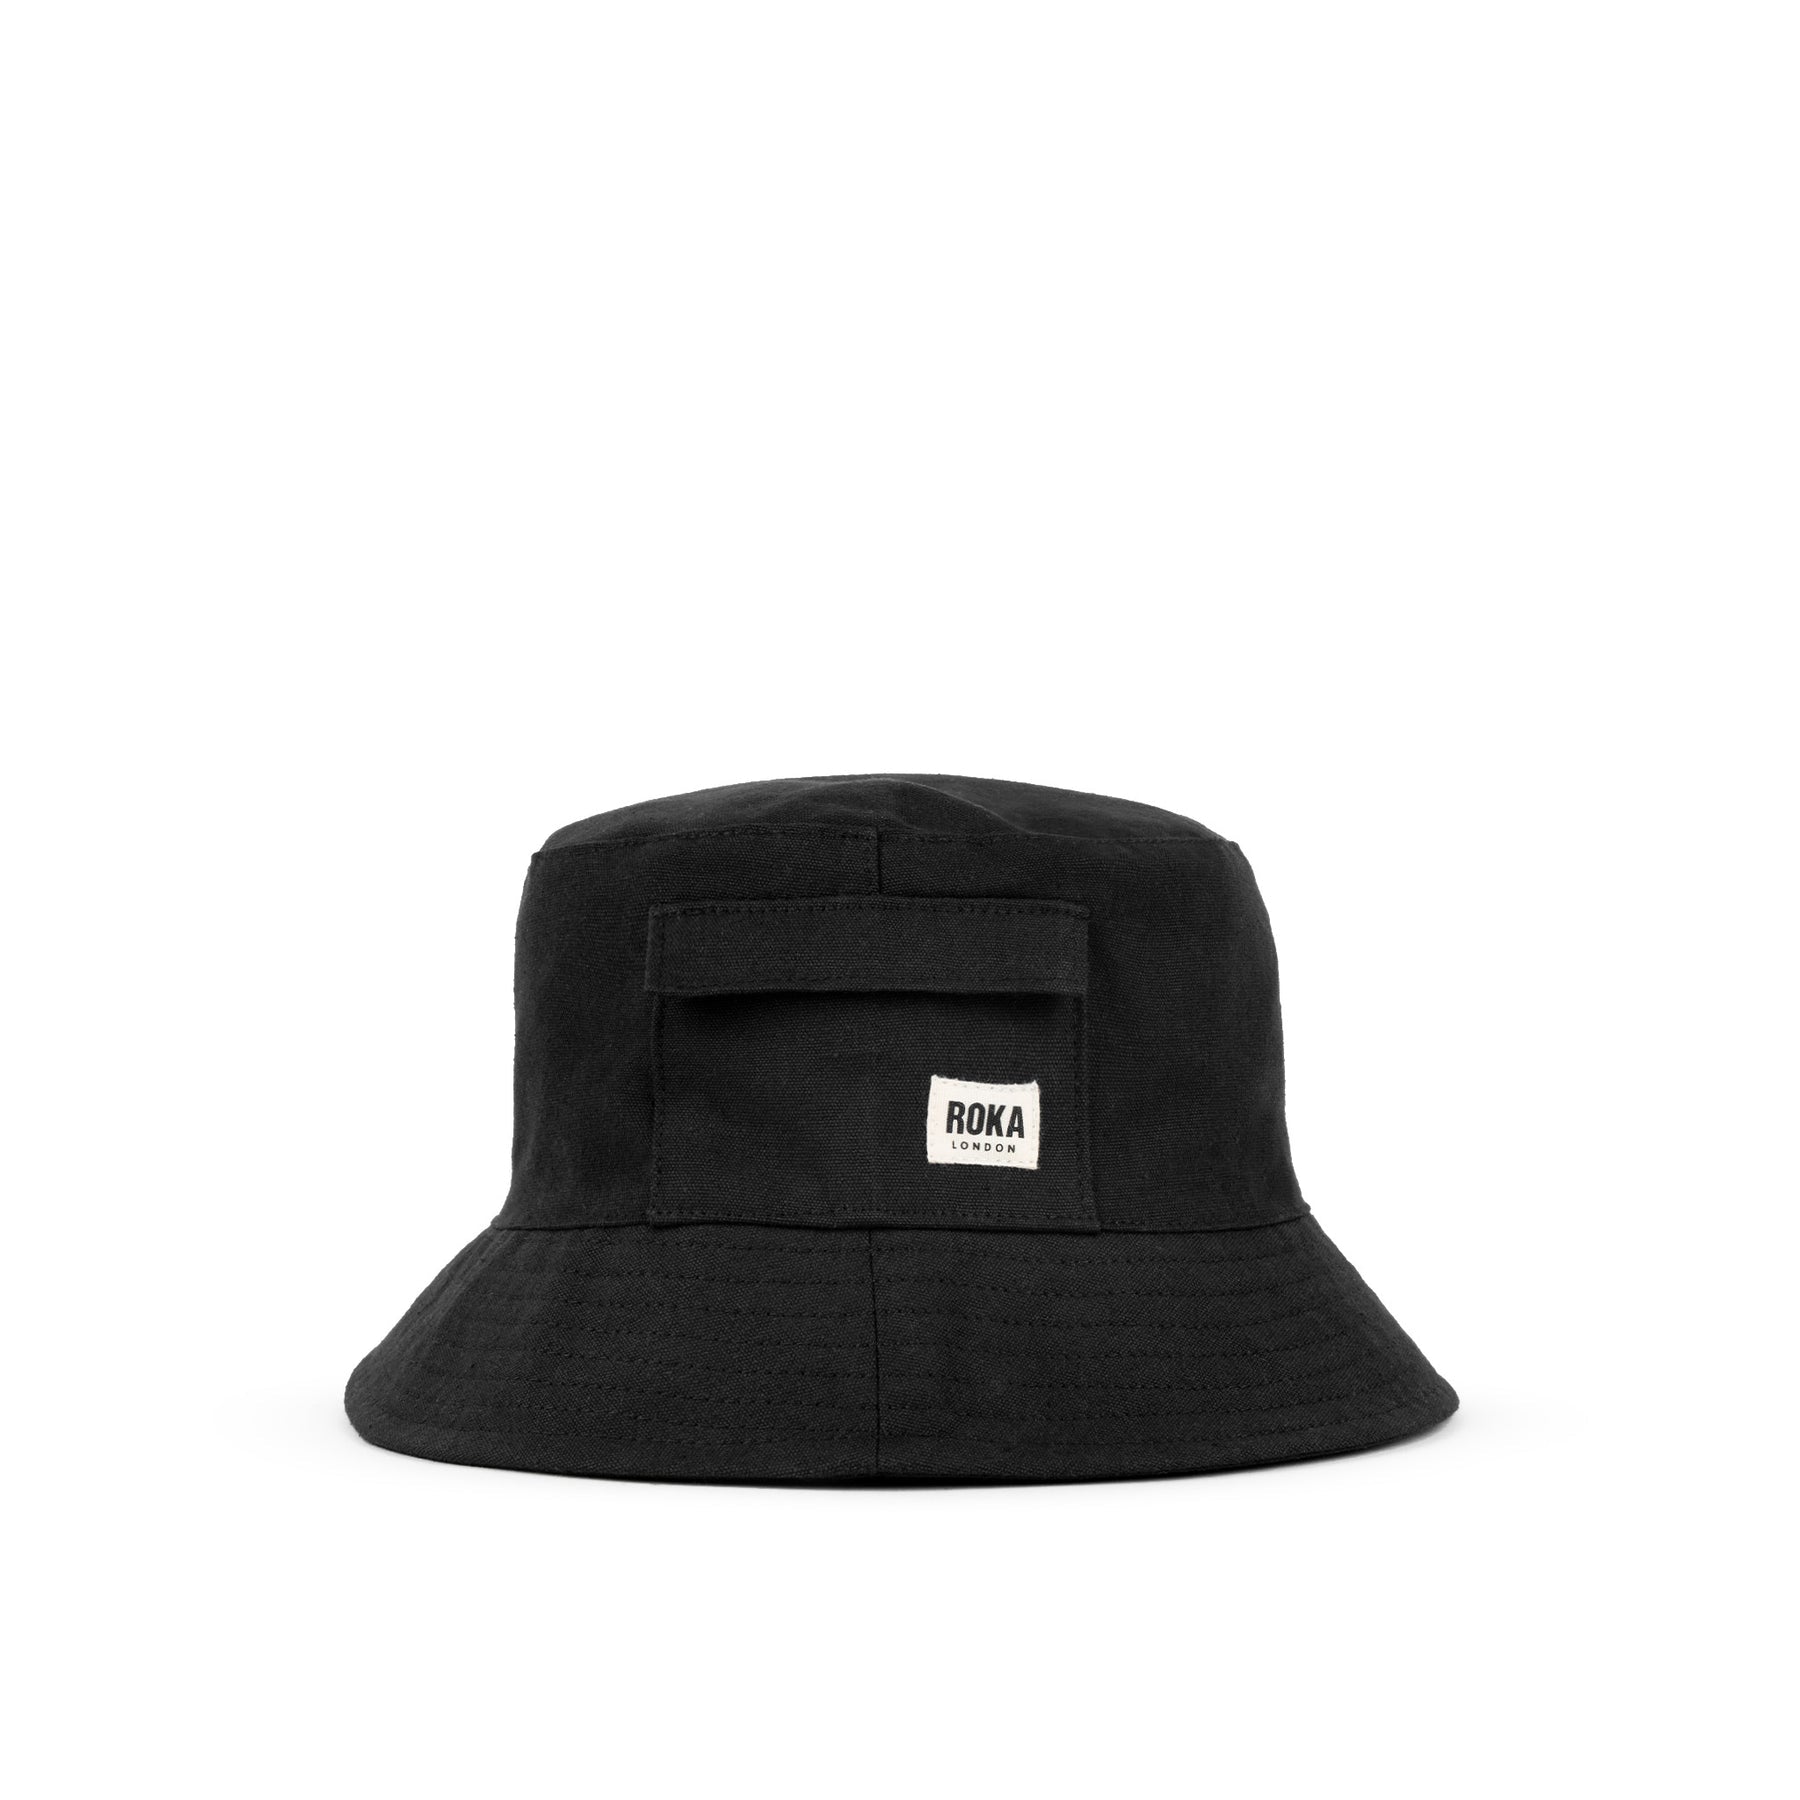 Roka Hatfield Bucket Hat, Black